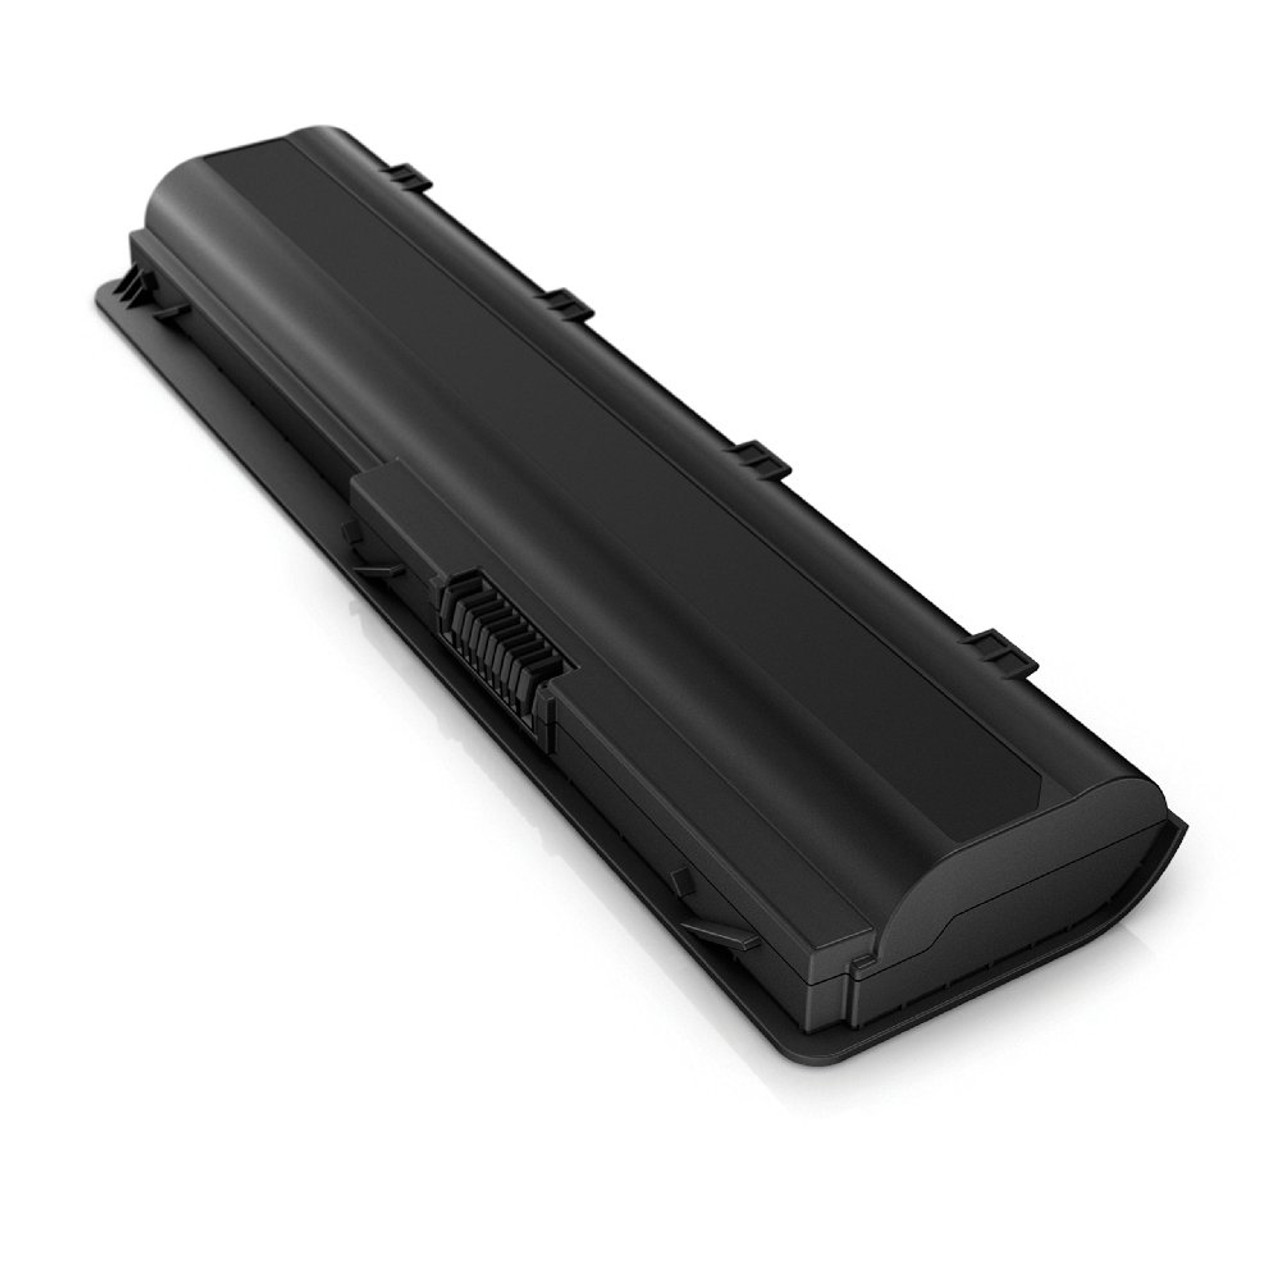 2XRG7 - Dell 6-Cell 56WHr 11.1V Li-Ion Laptop Battery for Inspiron 1120/M101z